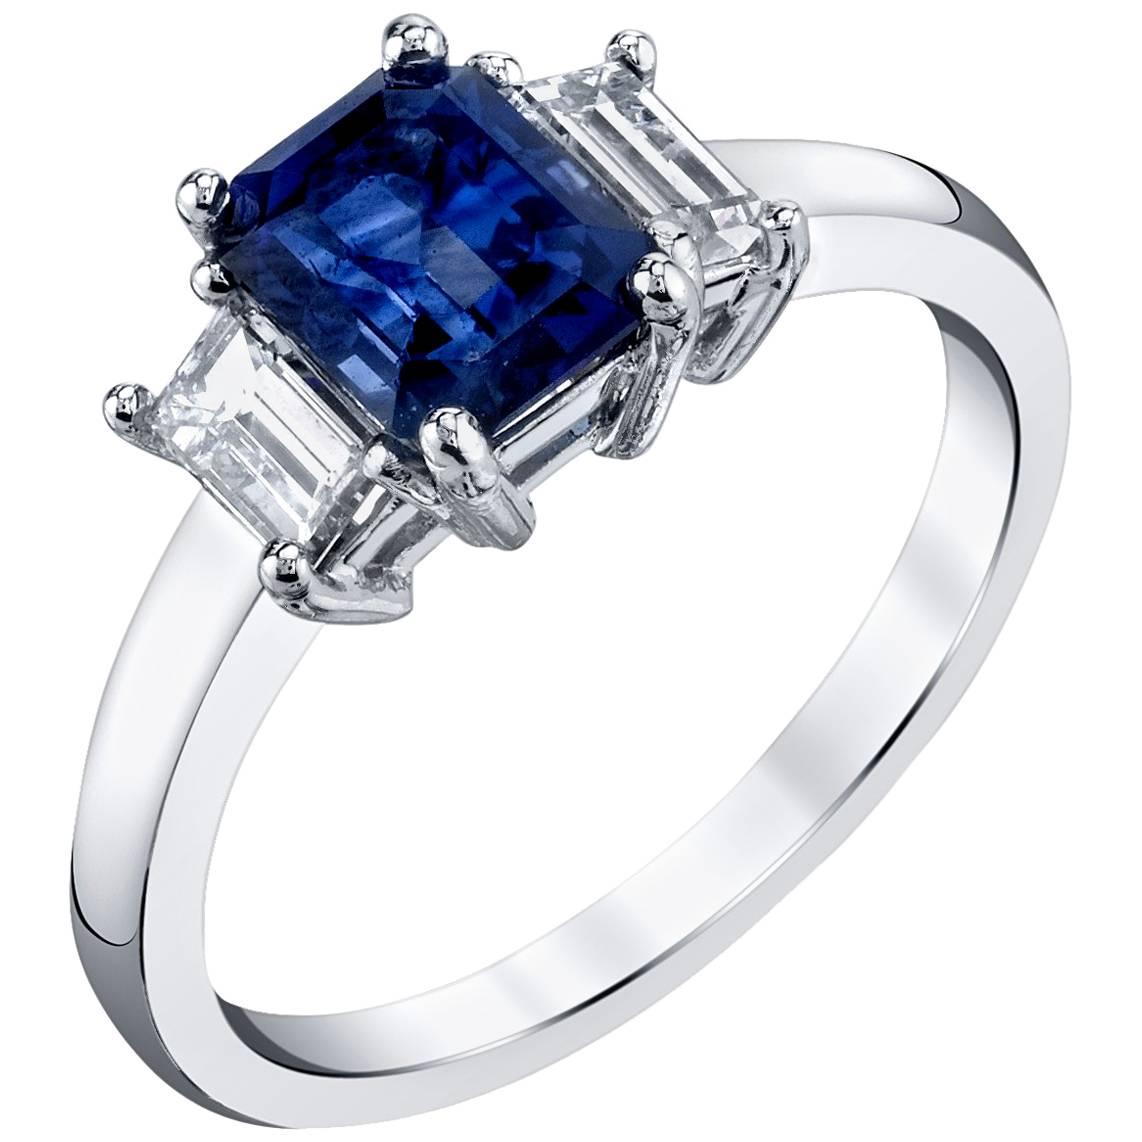 1.49 Carat Emerald Cut Sapphire and Diamond Baguette Ring 18k White Gold